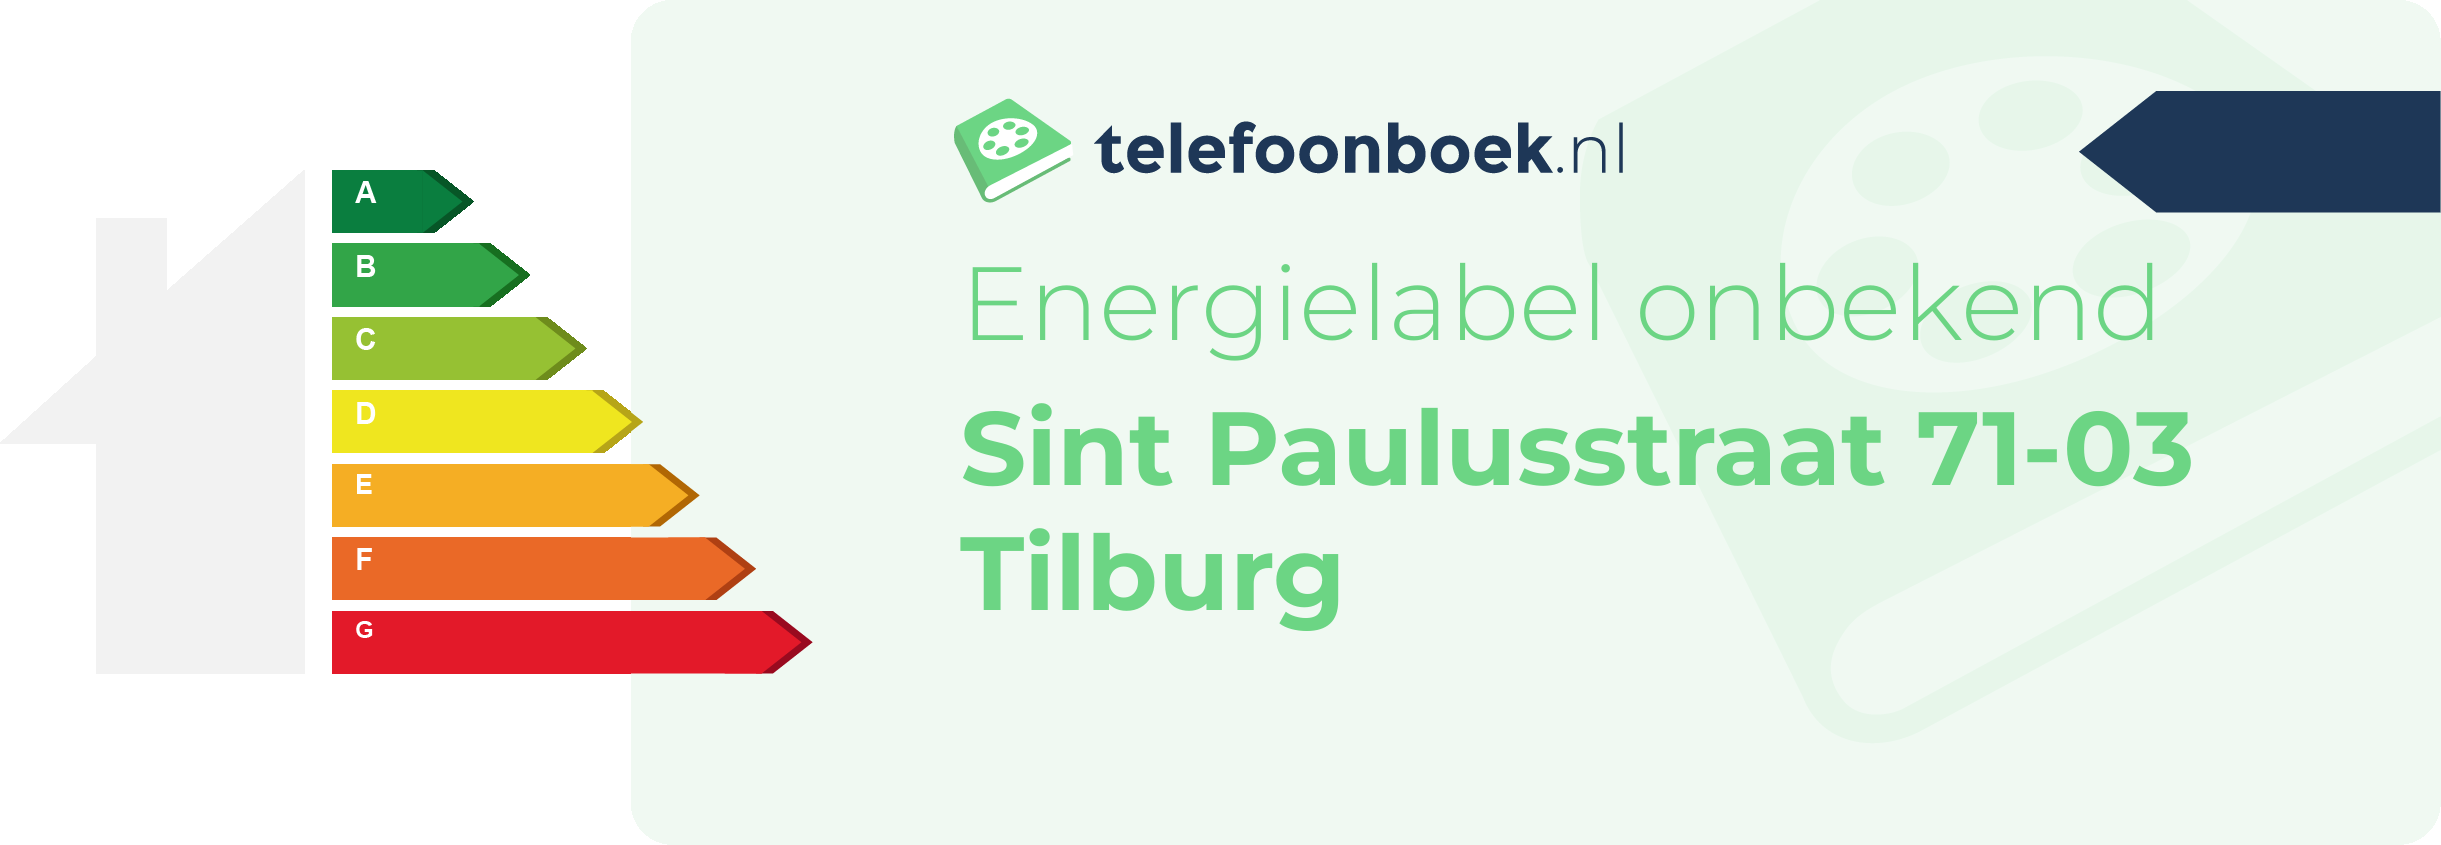 Energielabel Sint Paulusstraat 71-03 Tilburg